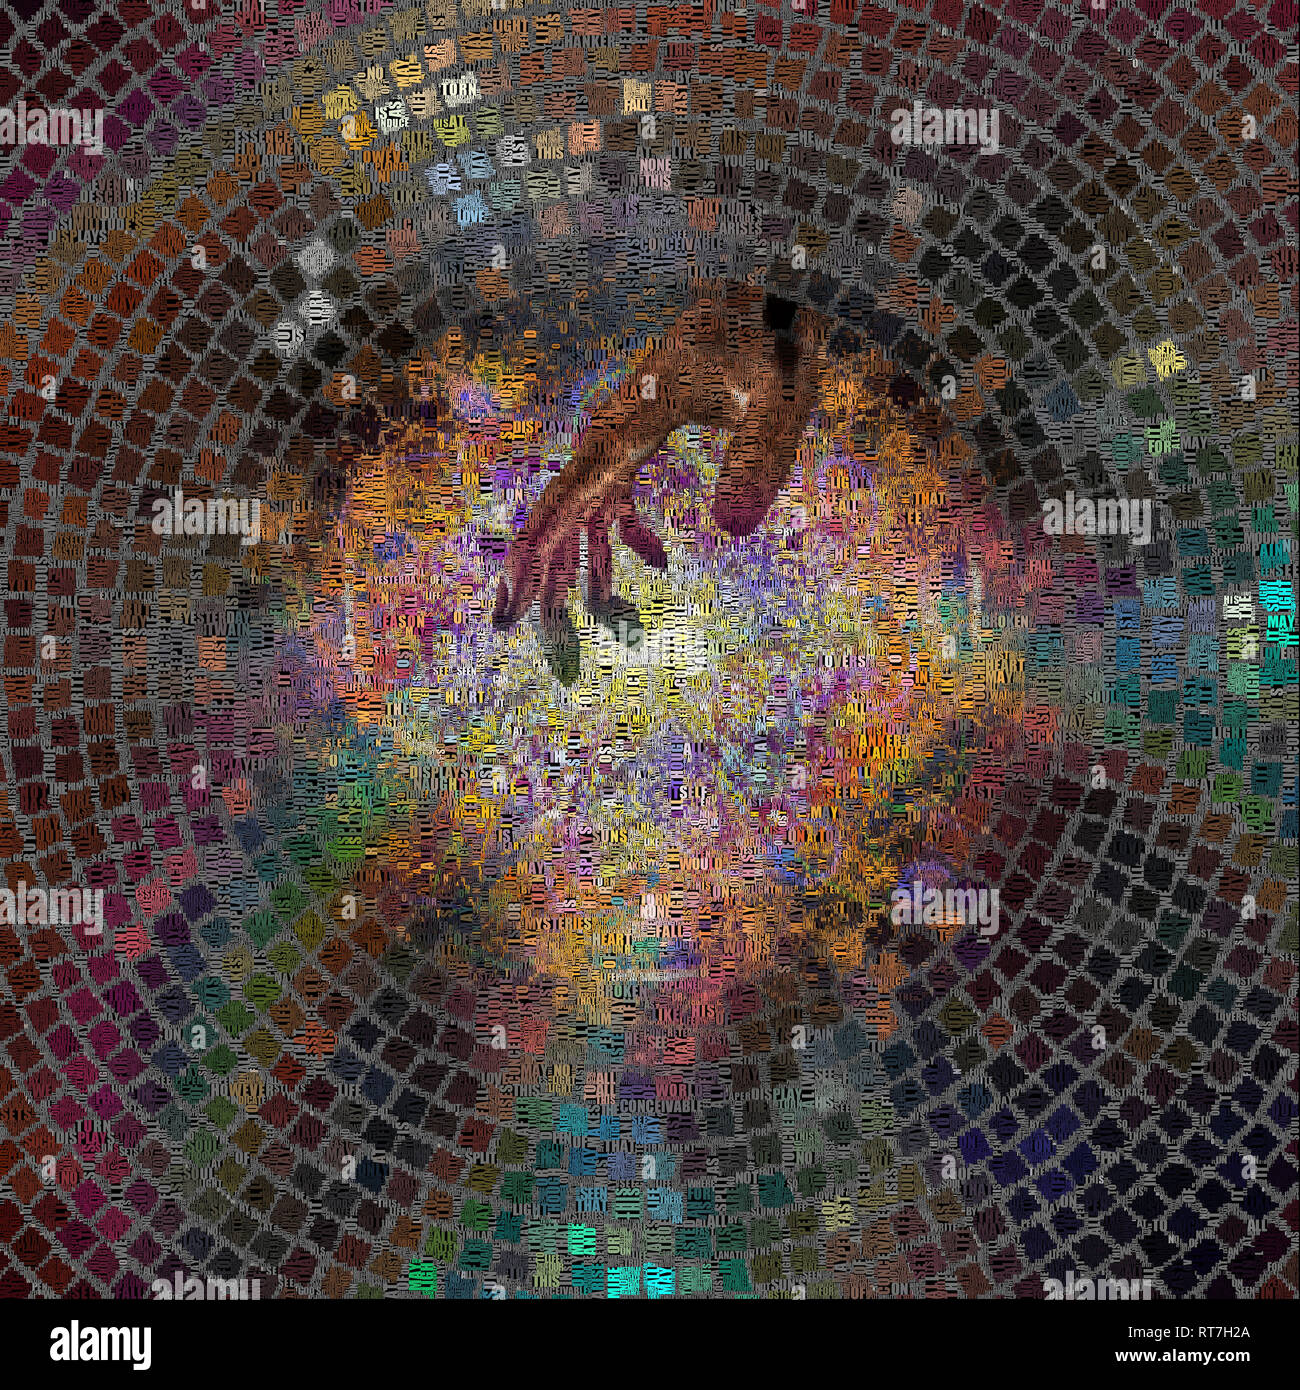 Mosaik. Hand Gottes. Bild aus Worten Stockfotografie - Alamy